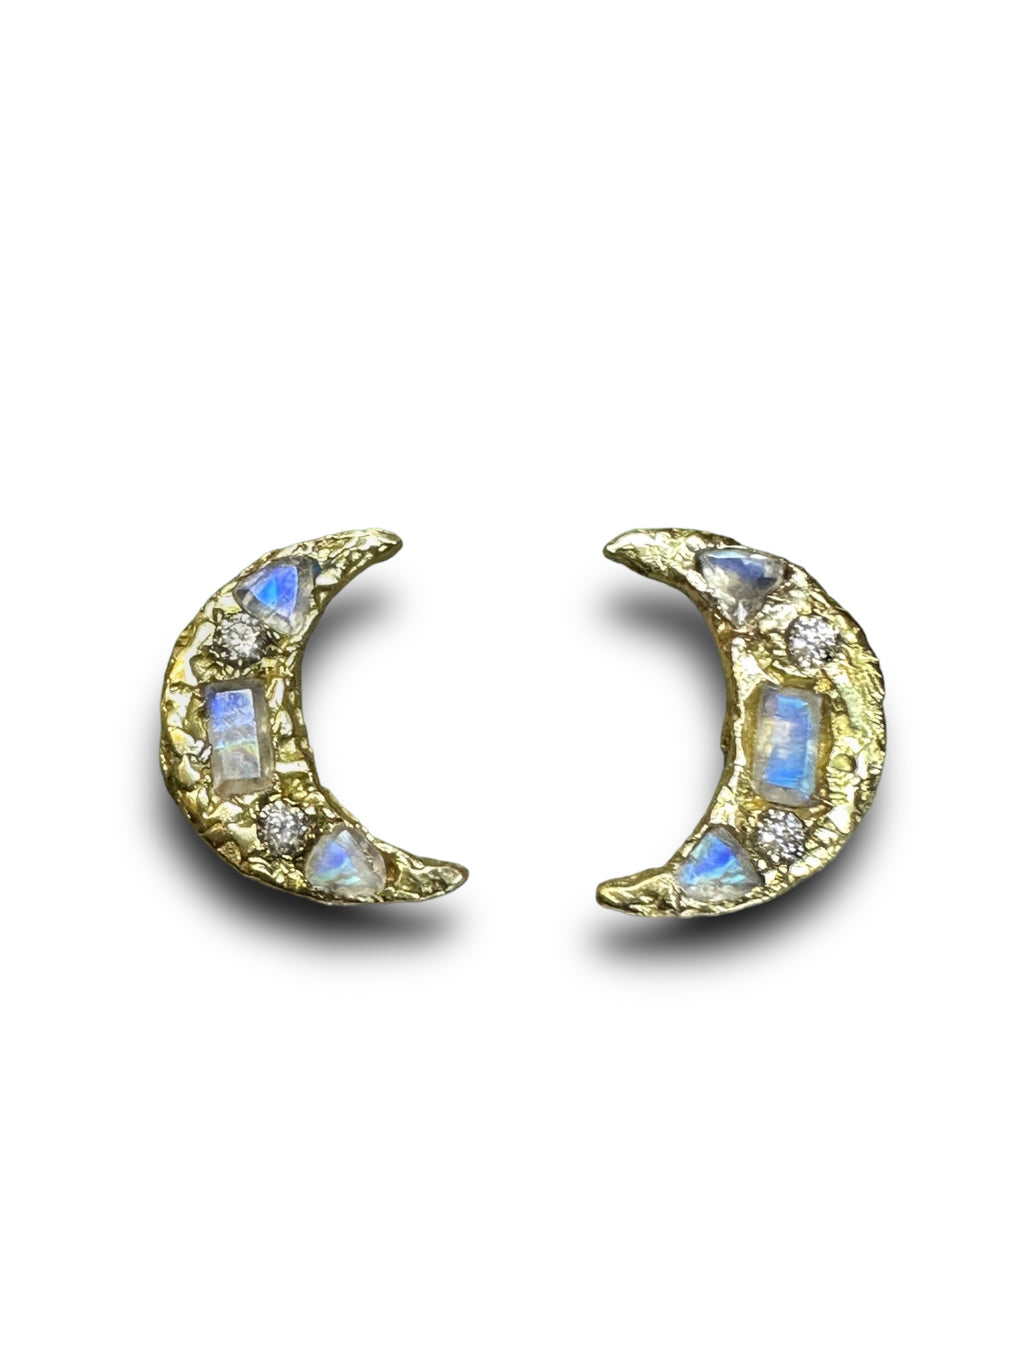 Large Celini 18K Yellow Gold Moon Stud Earrings with Diamonds and Moonstones